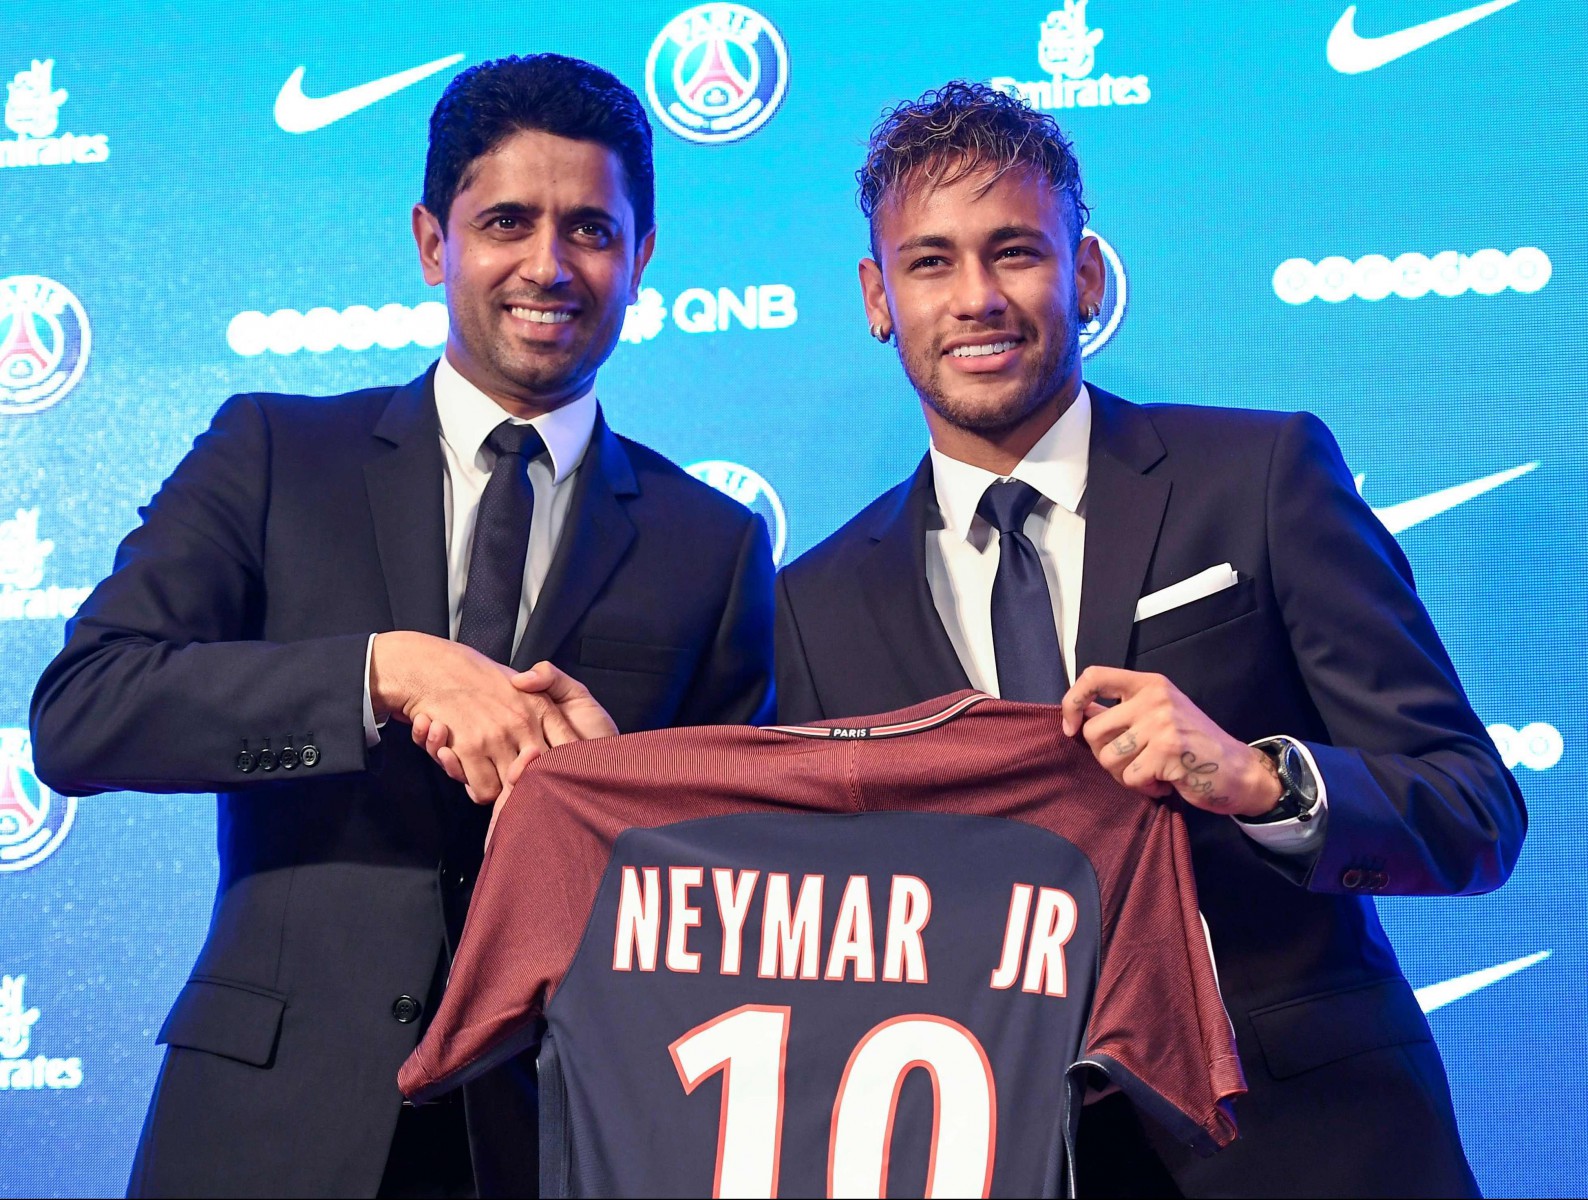 QTI have pumped millions into PSGs coffers, signing talents like Neymar